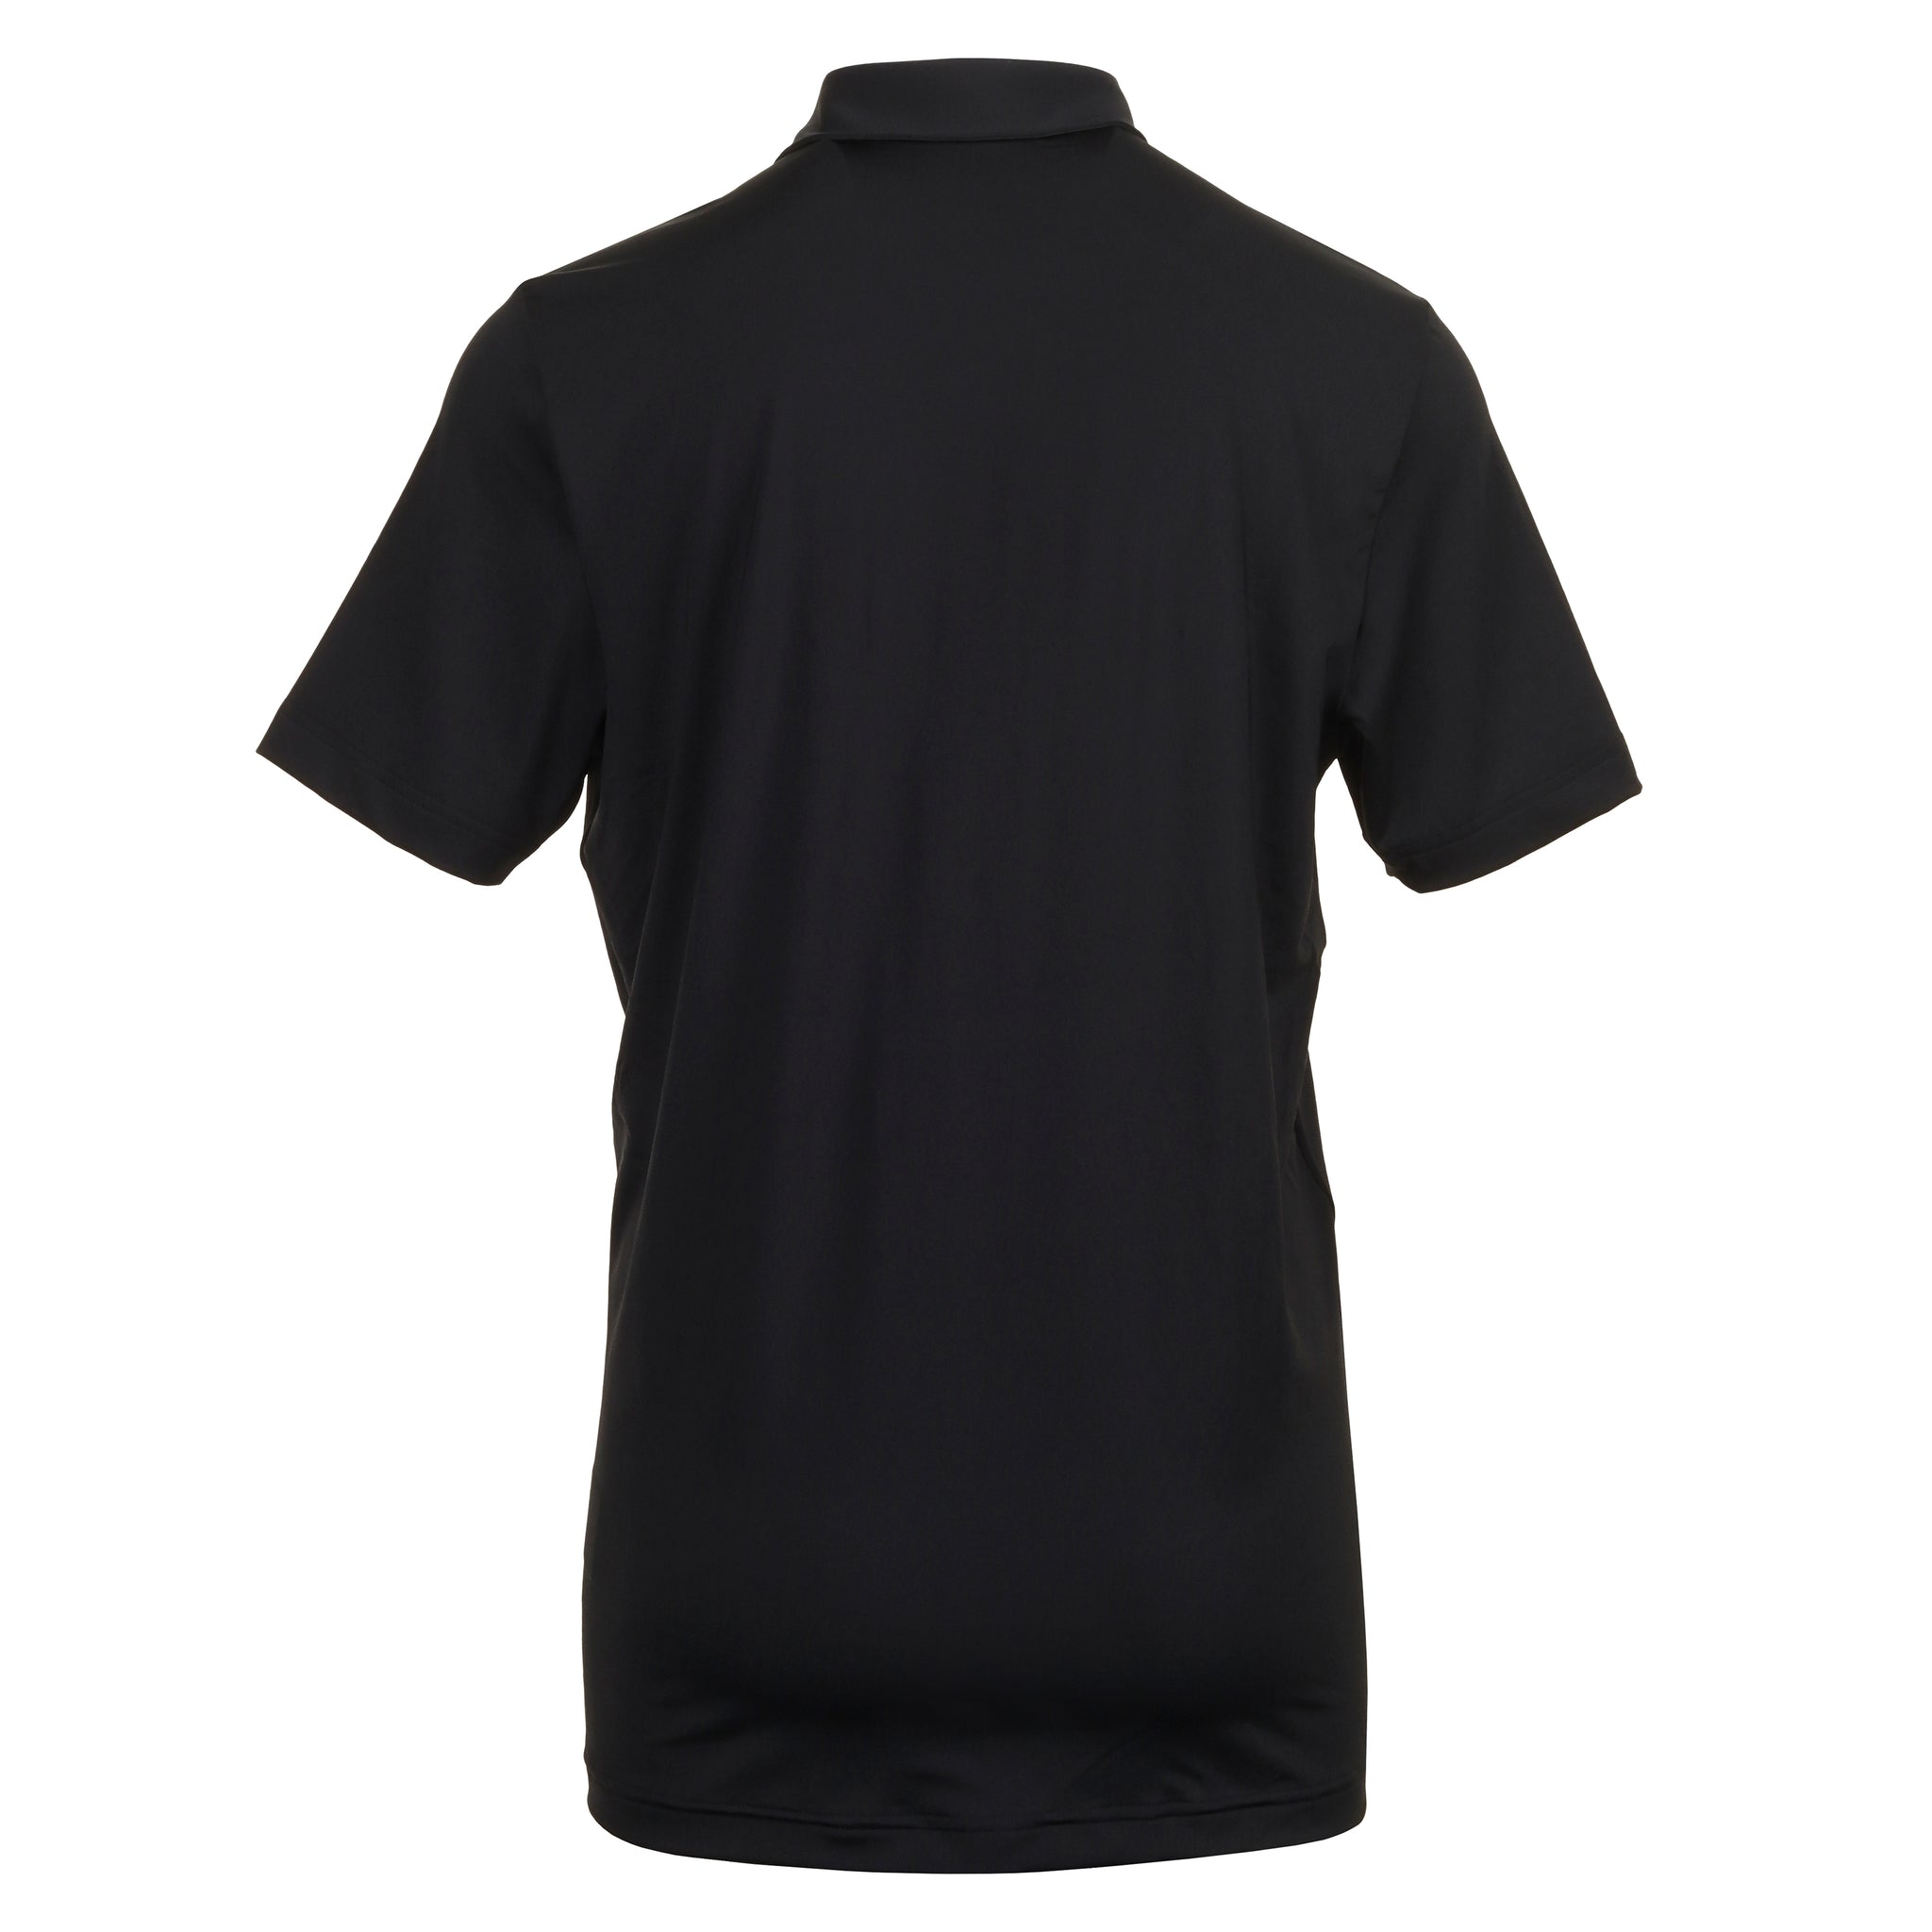 adidas-golf-ultimate365-solid-lc-shirt-im8409-black